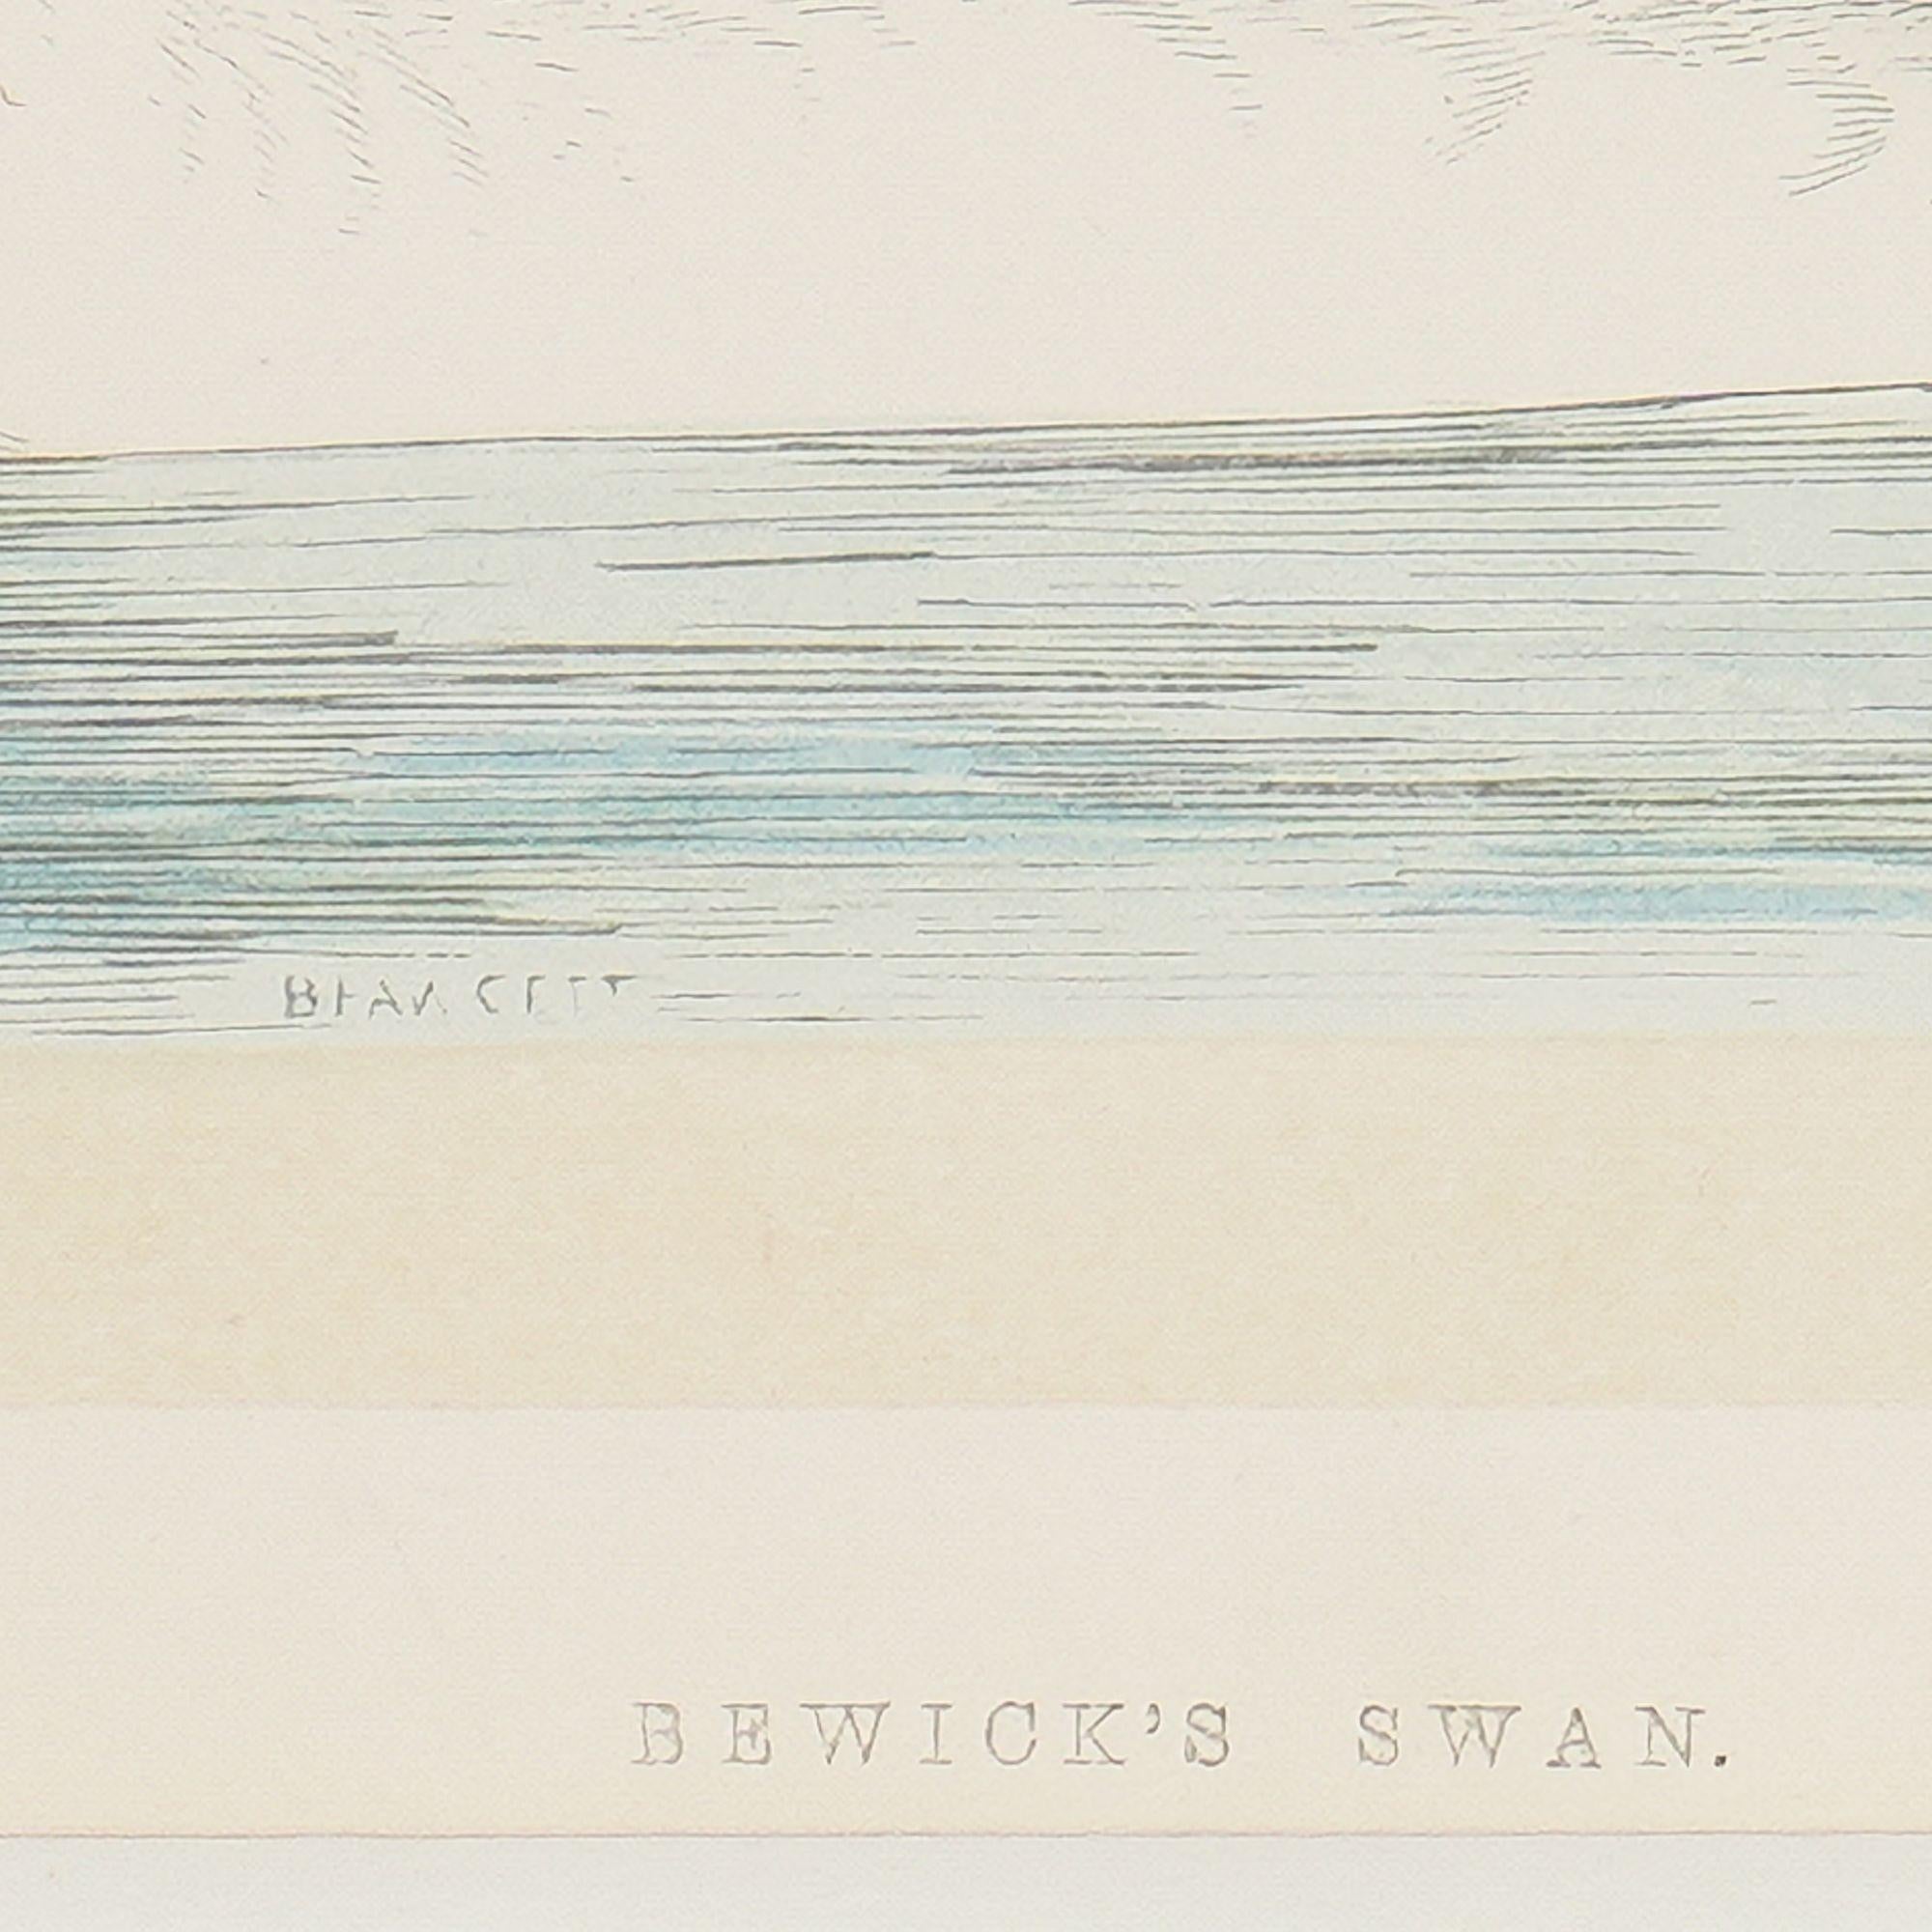 19th Century Hooper & Berwick's Swans by Benjamin Fawcett, 1851